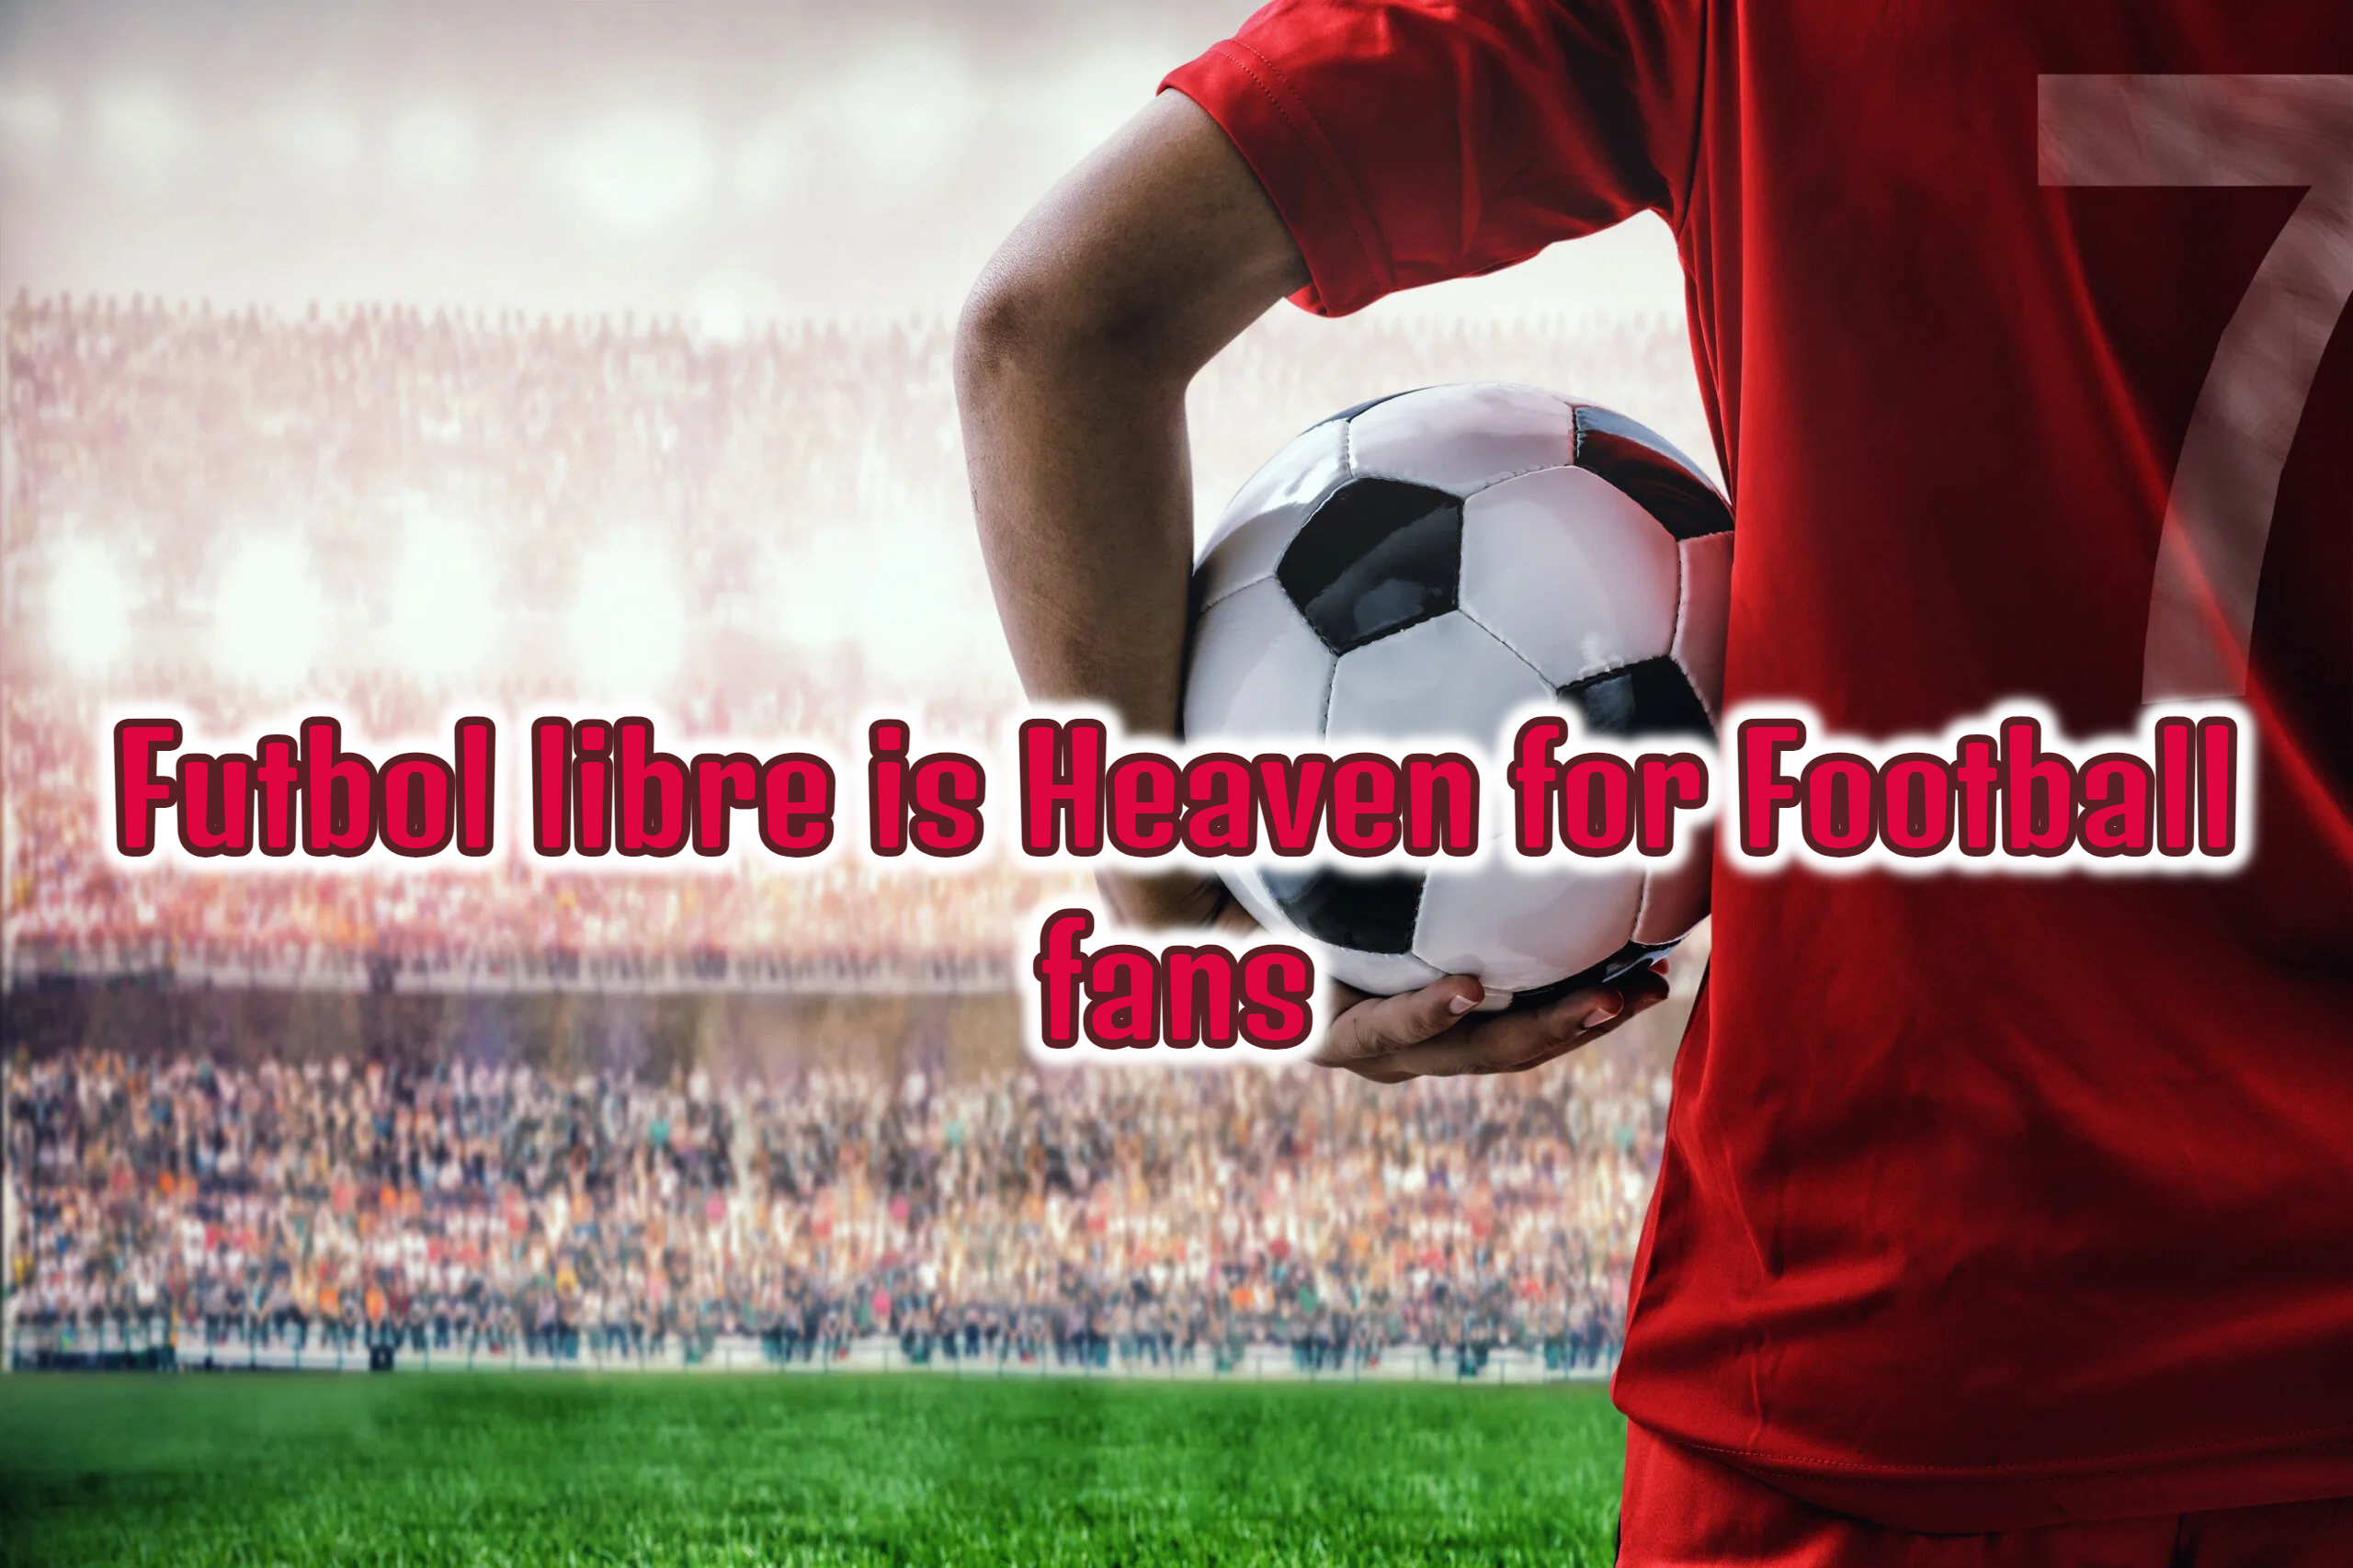 Futbol libre is Heaven for Football fans